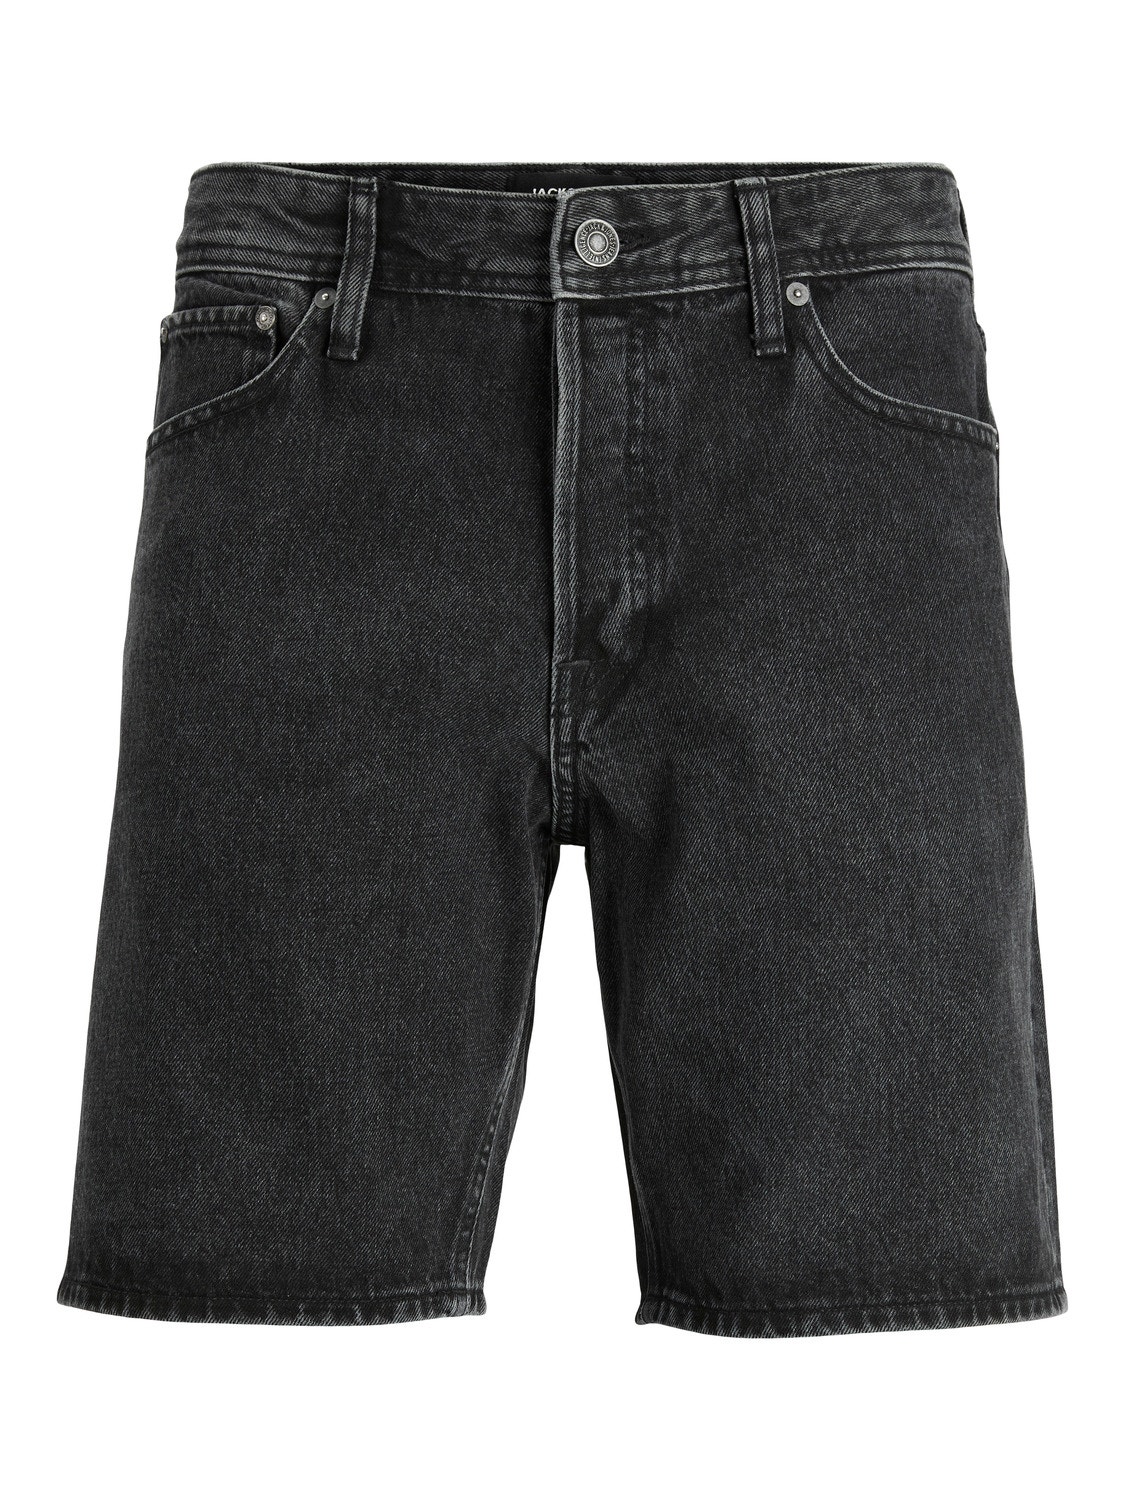 Jack & Jones Relaxed Fit Jeans Shorts -Black Denim - 12223607